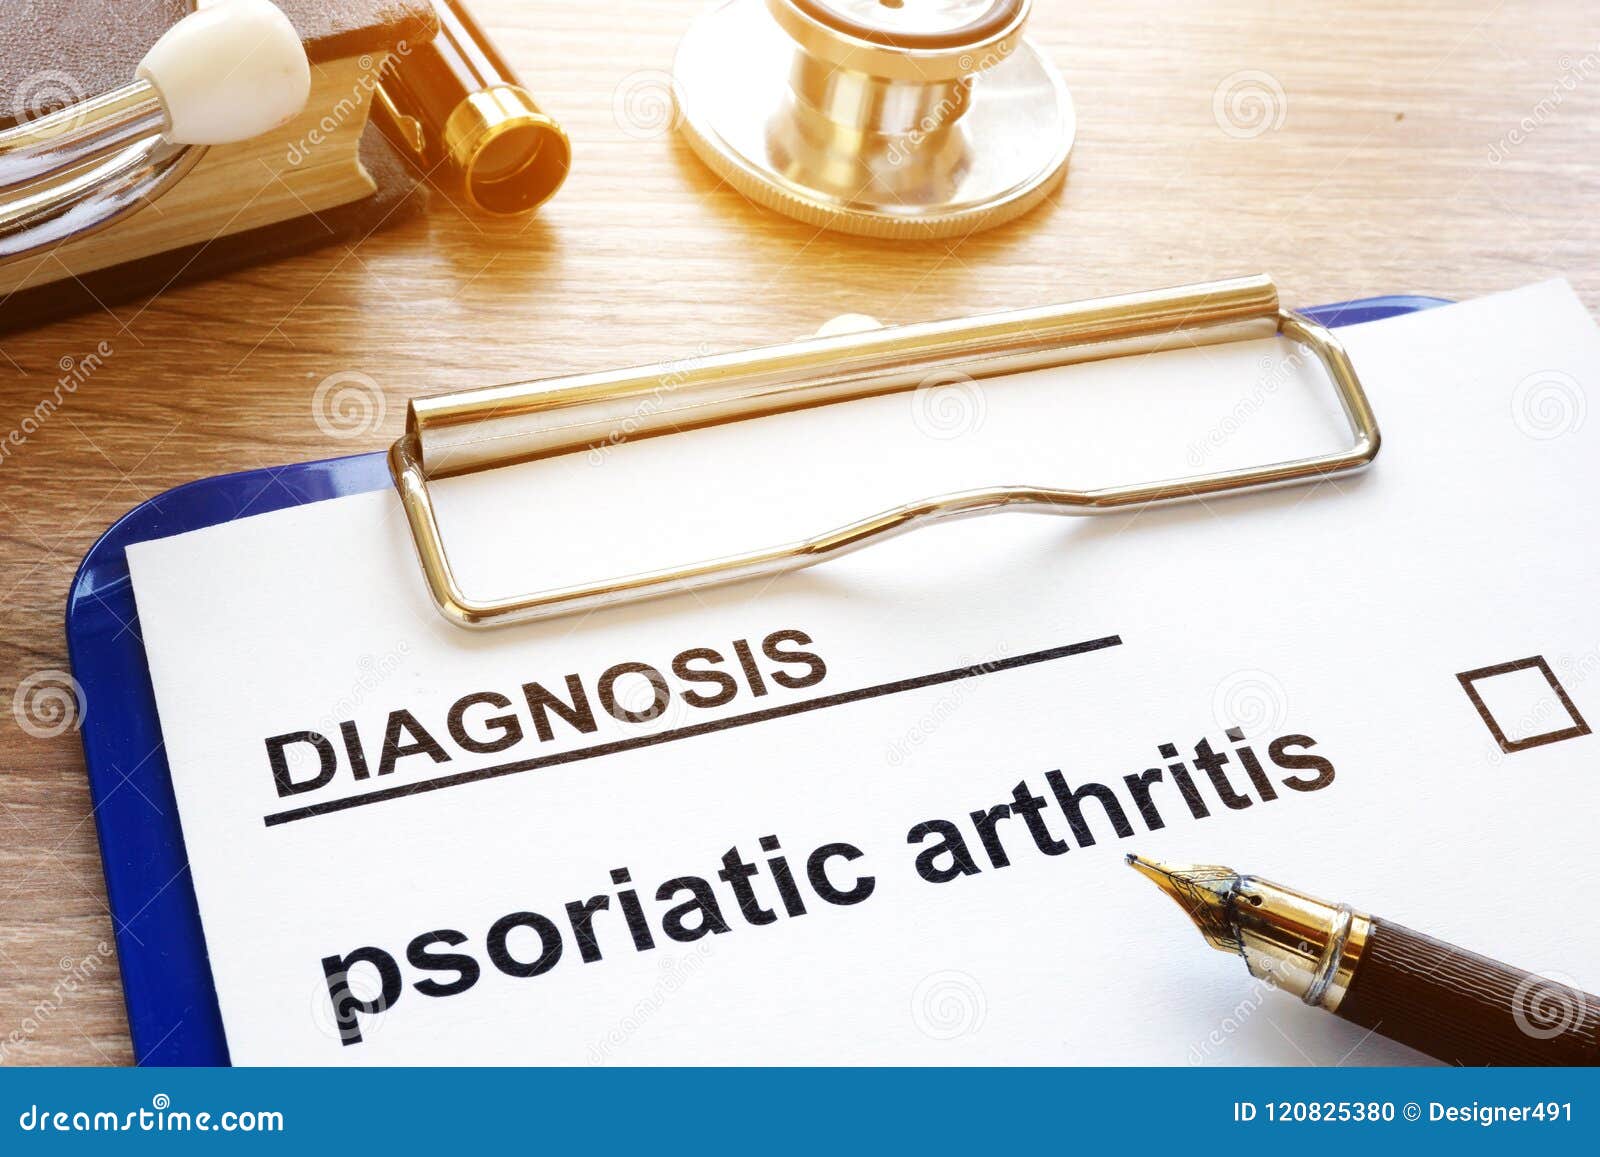 diagnosis psoriatic arthritis and clipboard.